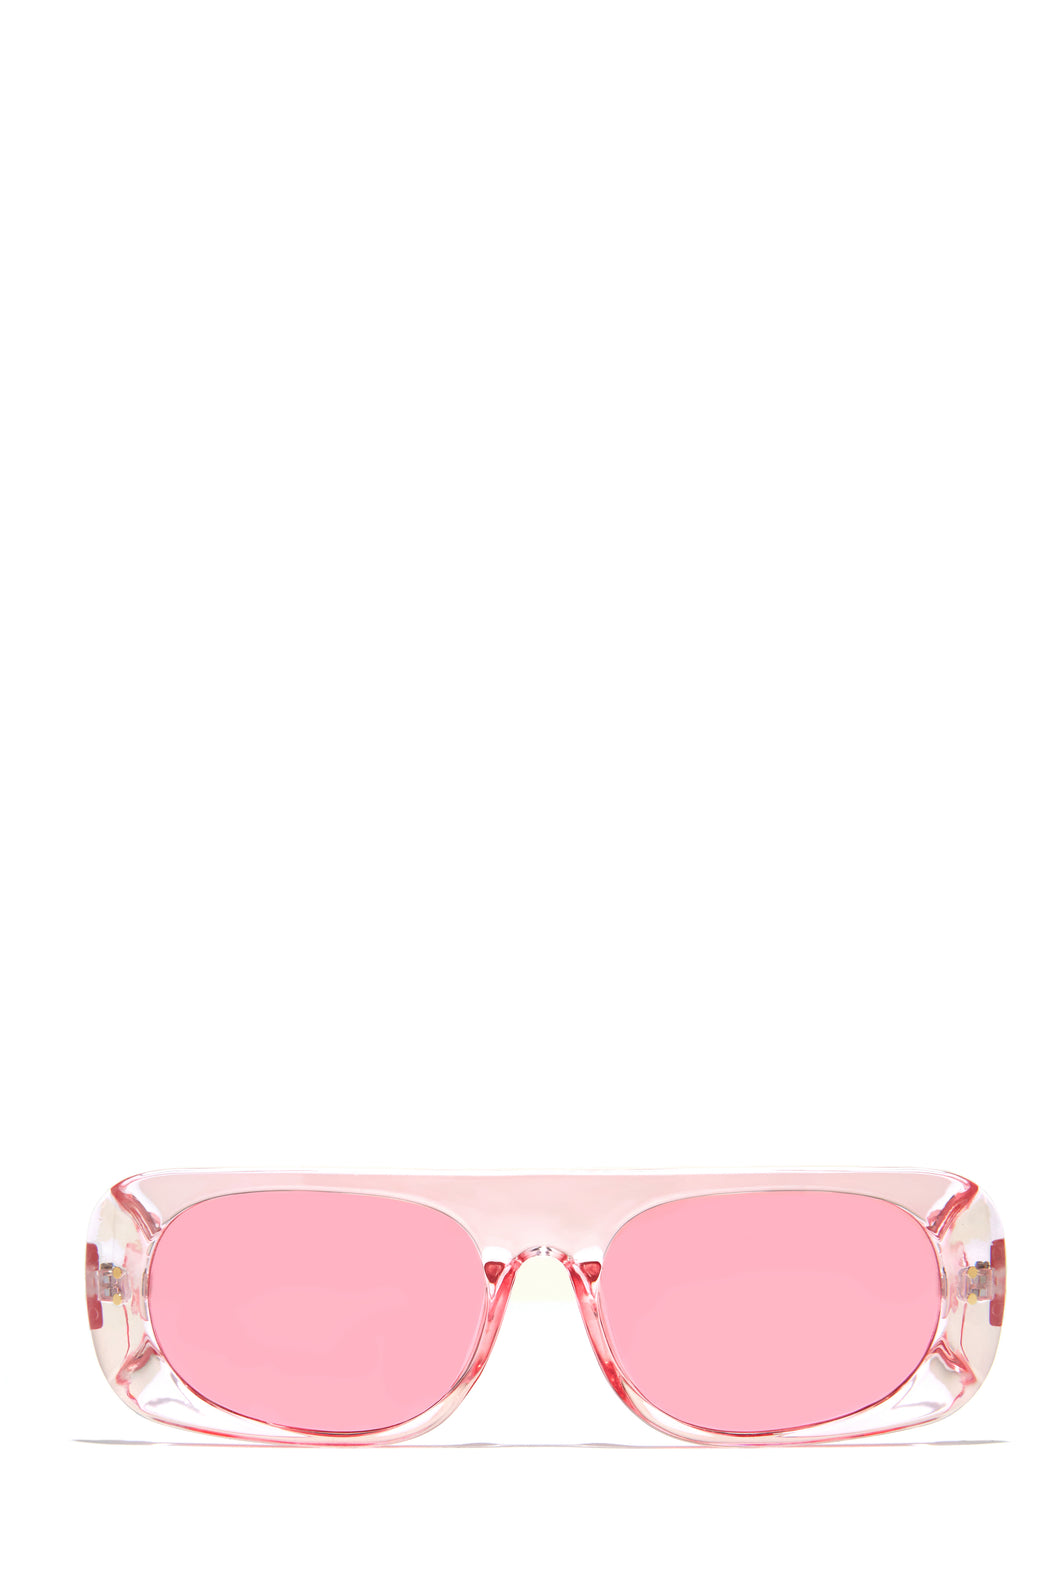 Pink Spring Sunglasses